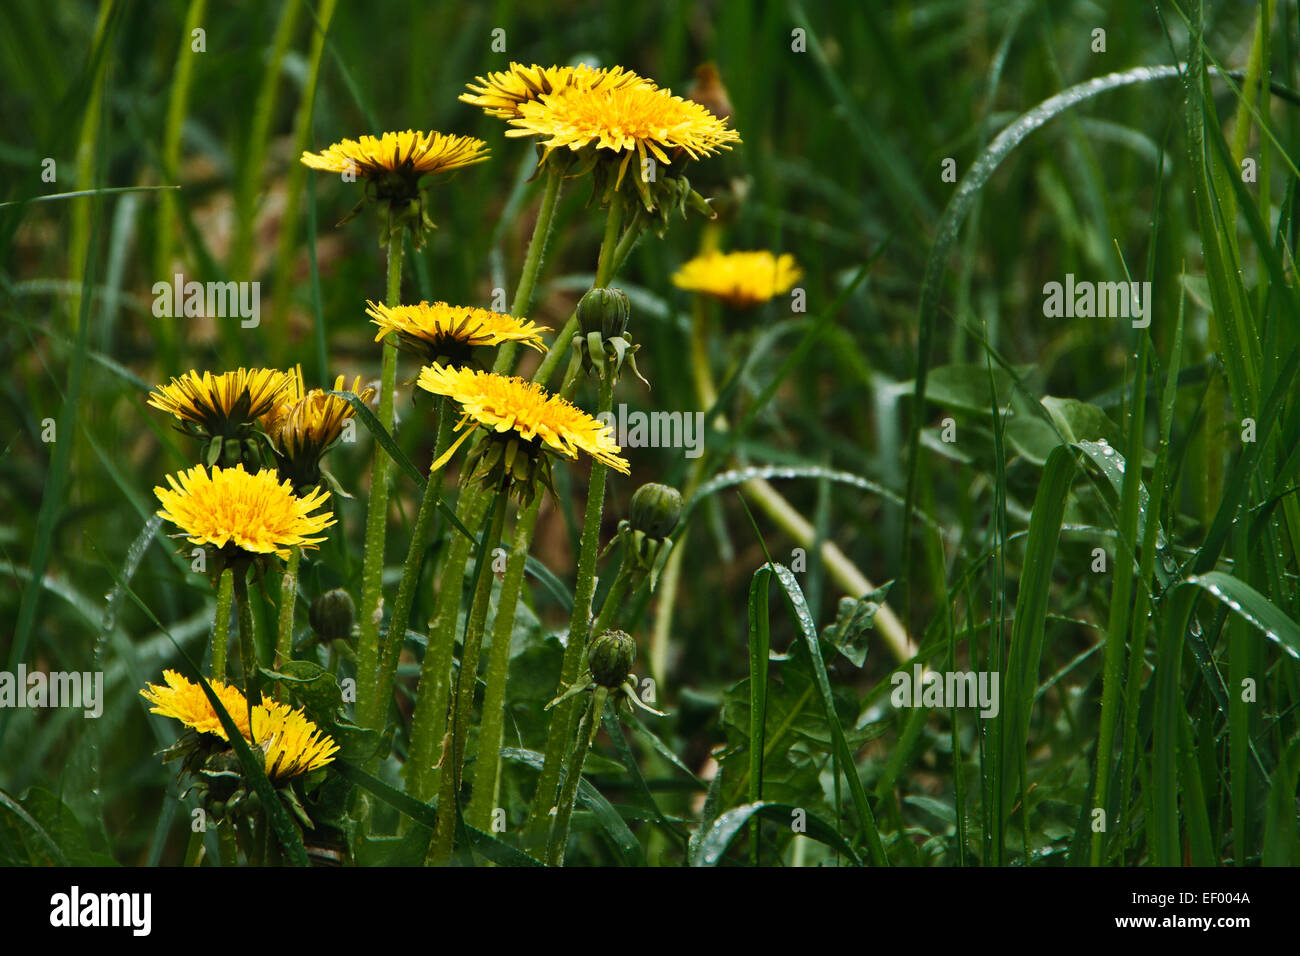 Dandelion in the wet grass. Stock Photo